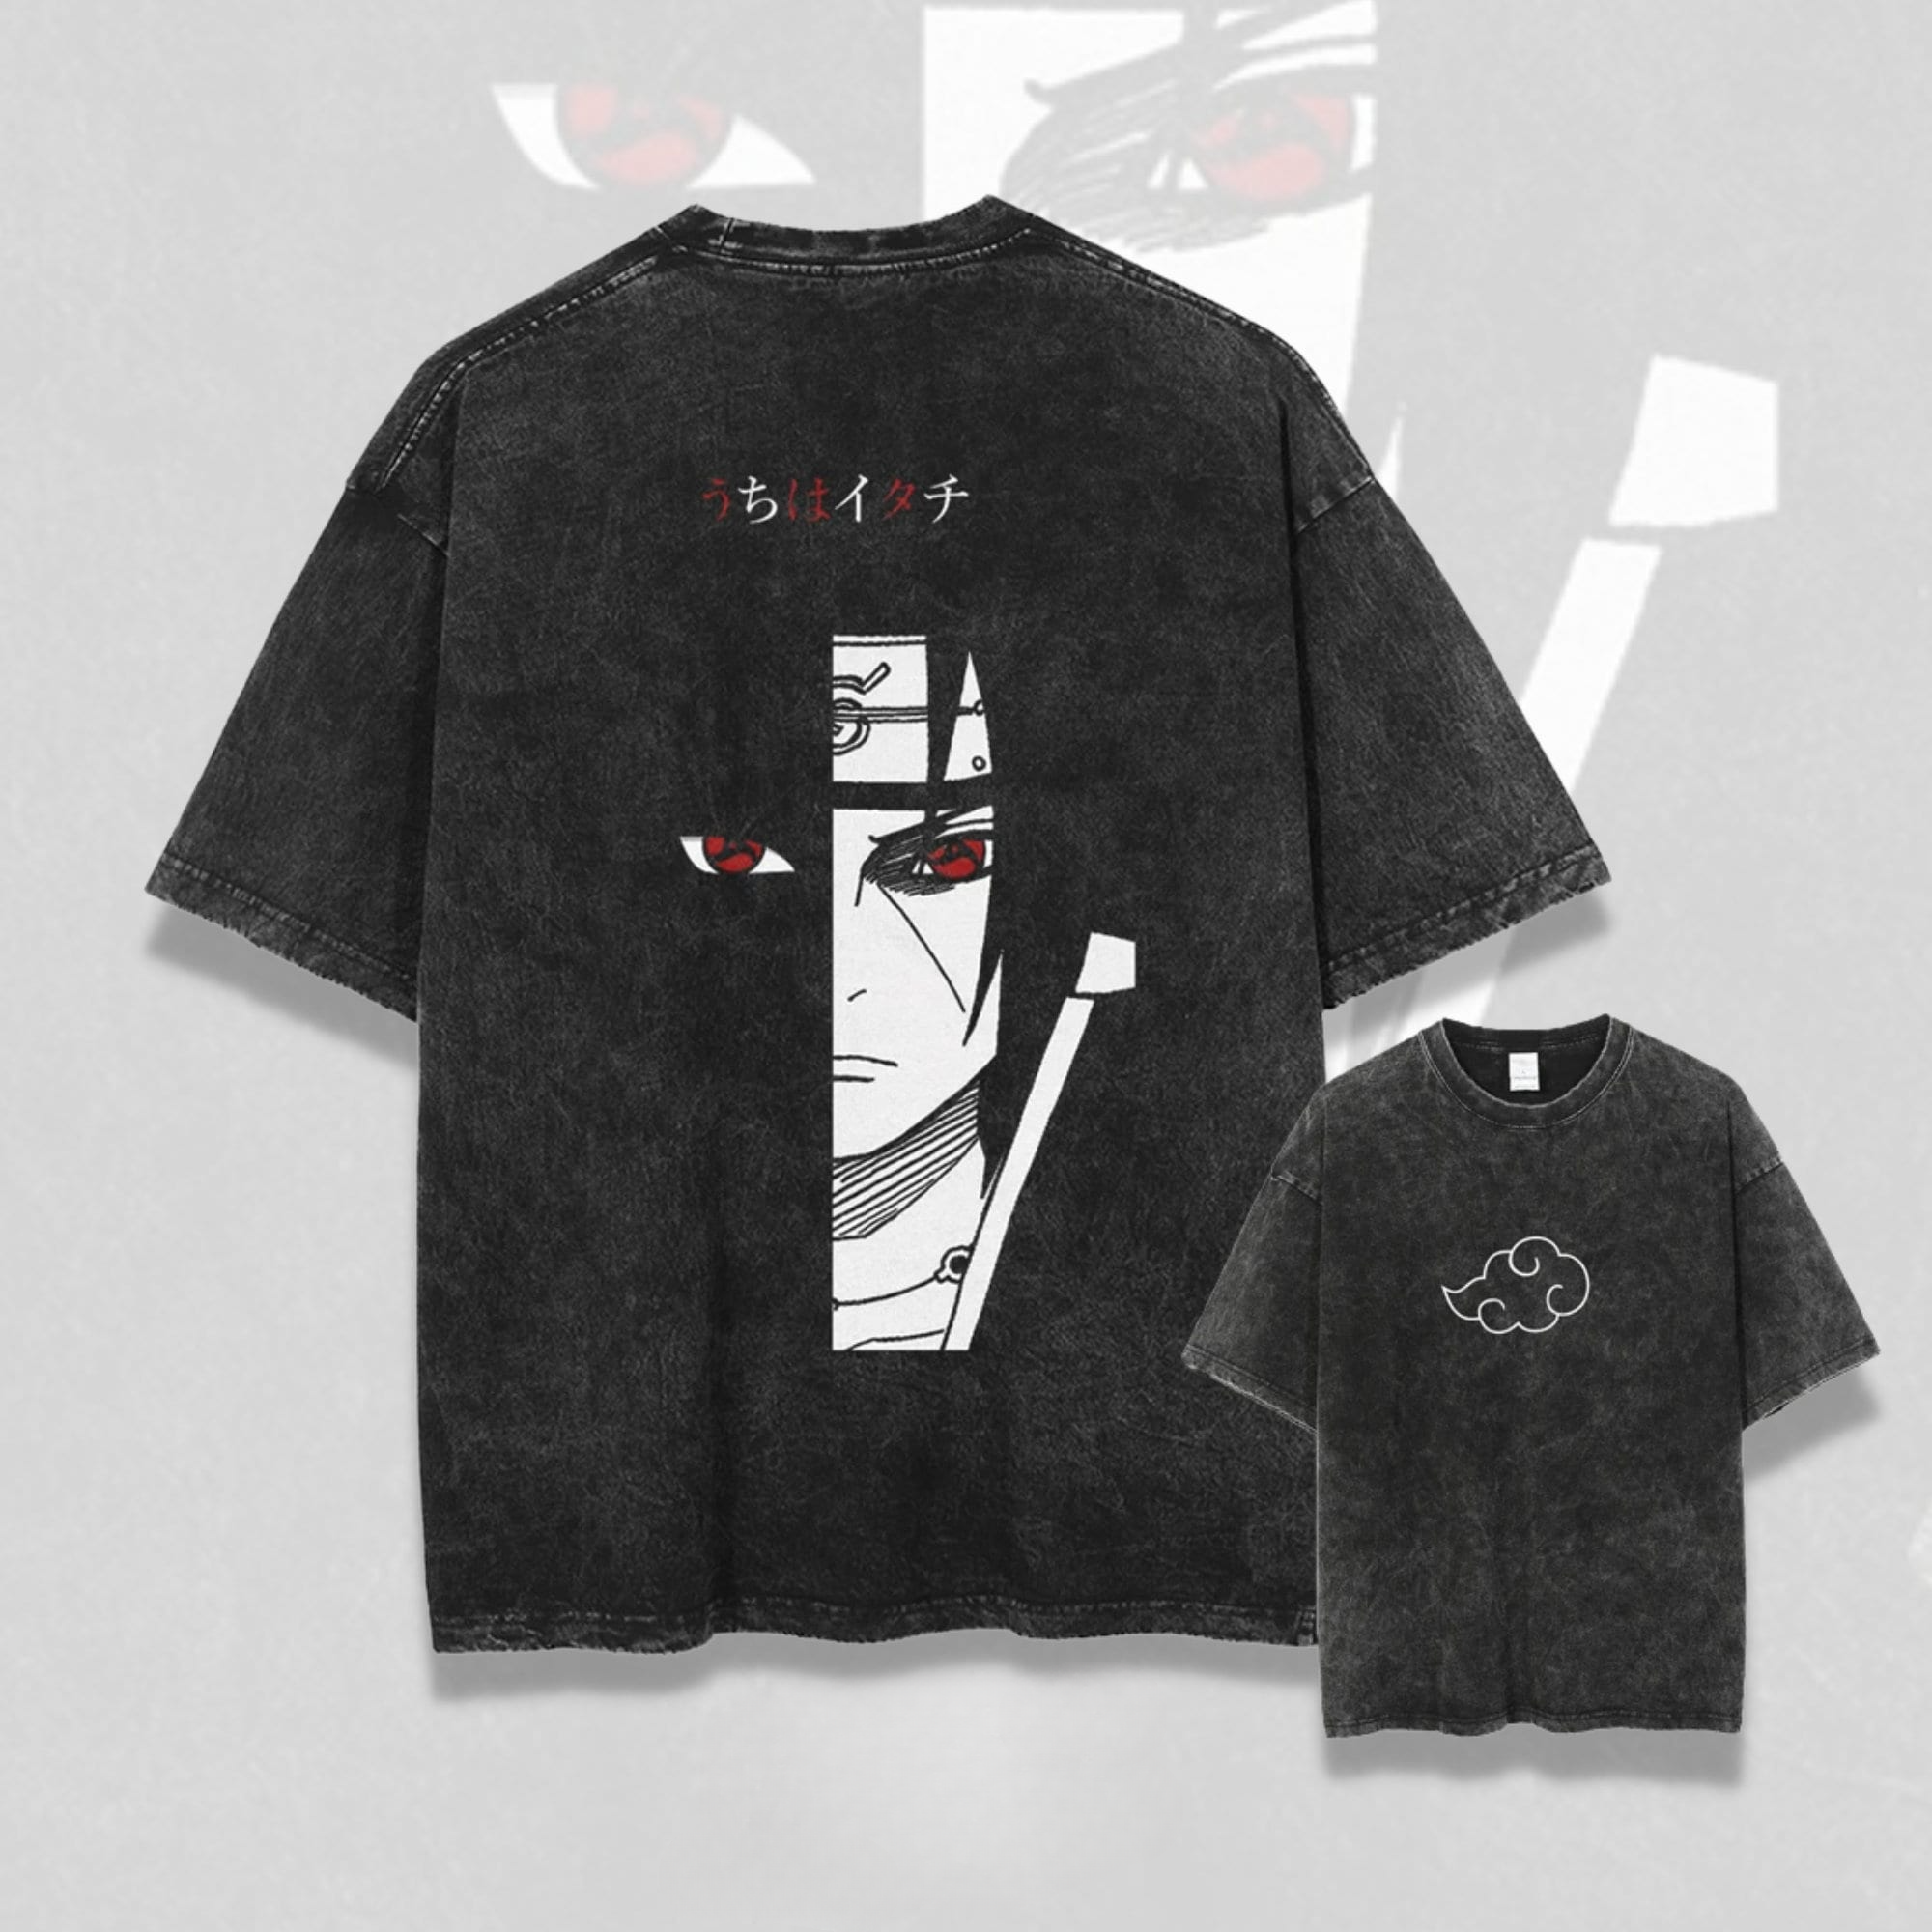 Anime Shirt, Vintage Anime Shirt, Retro Anime Shirt, Graphic Anime Unisex Shirt, Gift for him, Gift for her, Oversize Anime Washed T-shirt